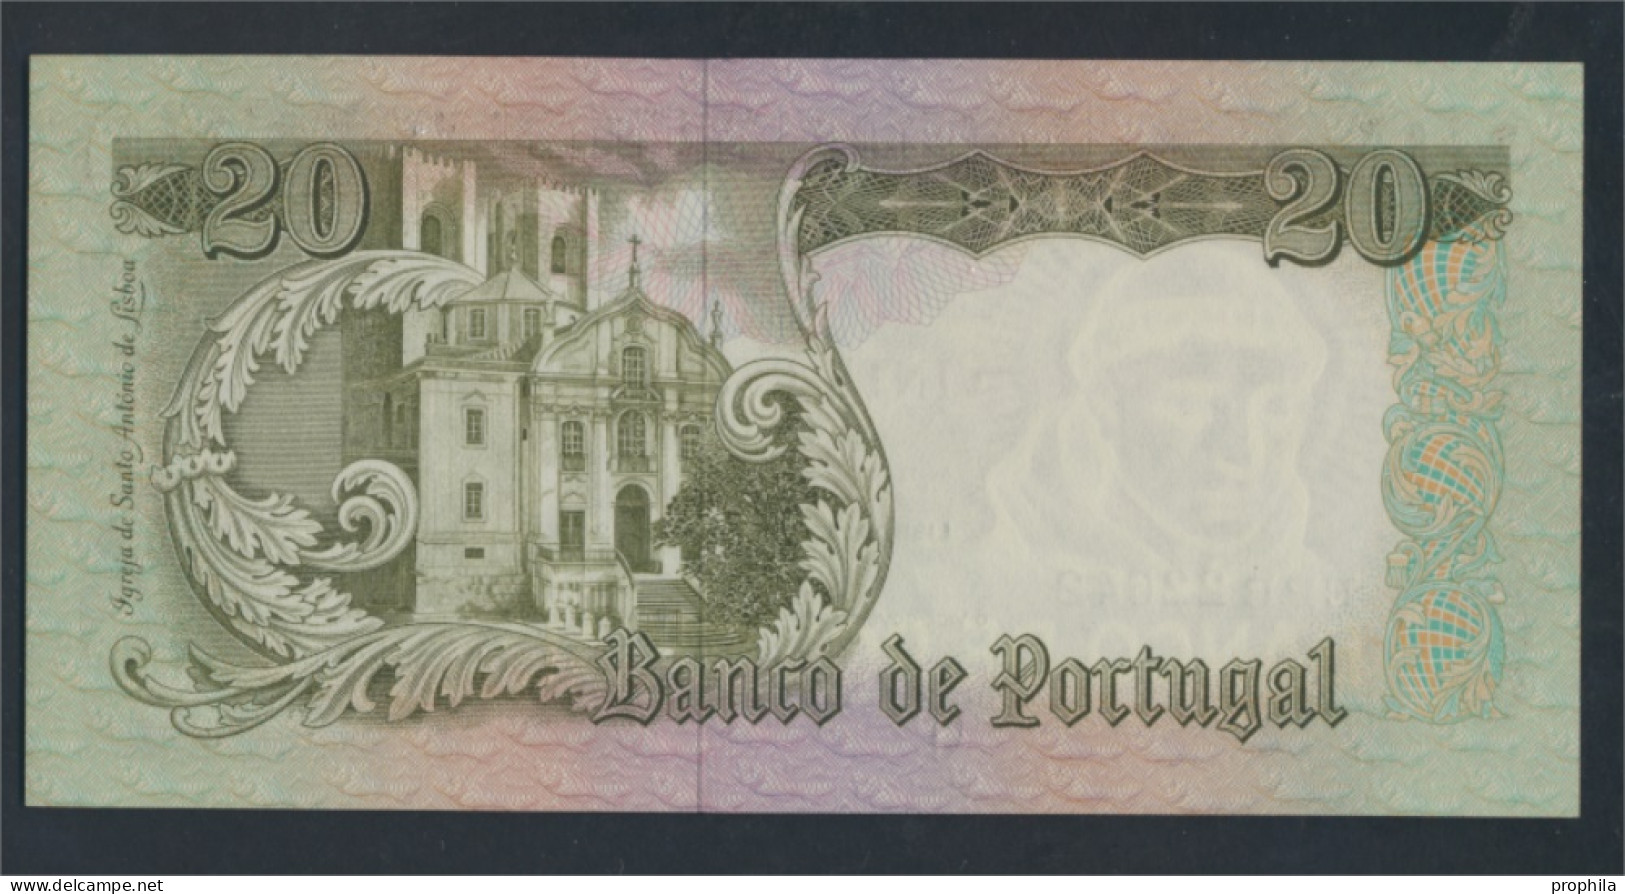 Portugal Pick-Nr: 167b Bankfrisch 1964 20 Escudos (9855671 - Portugal